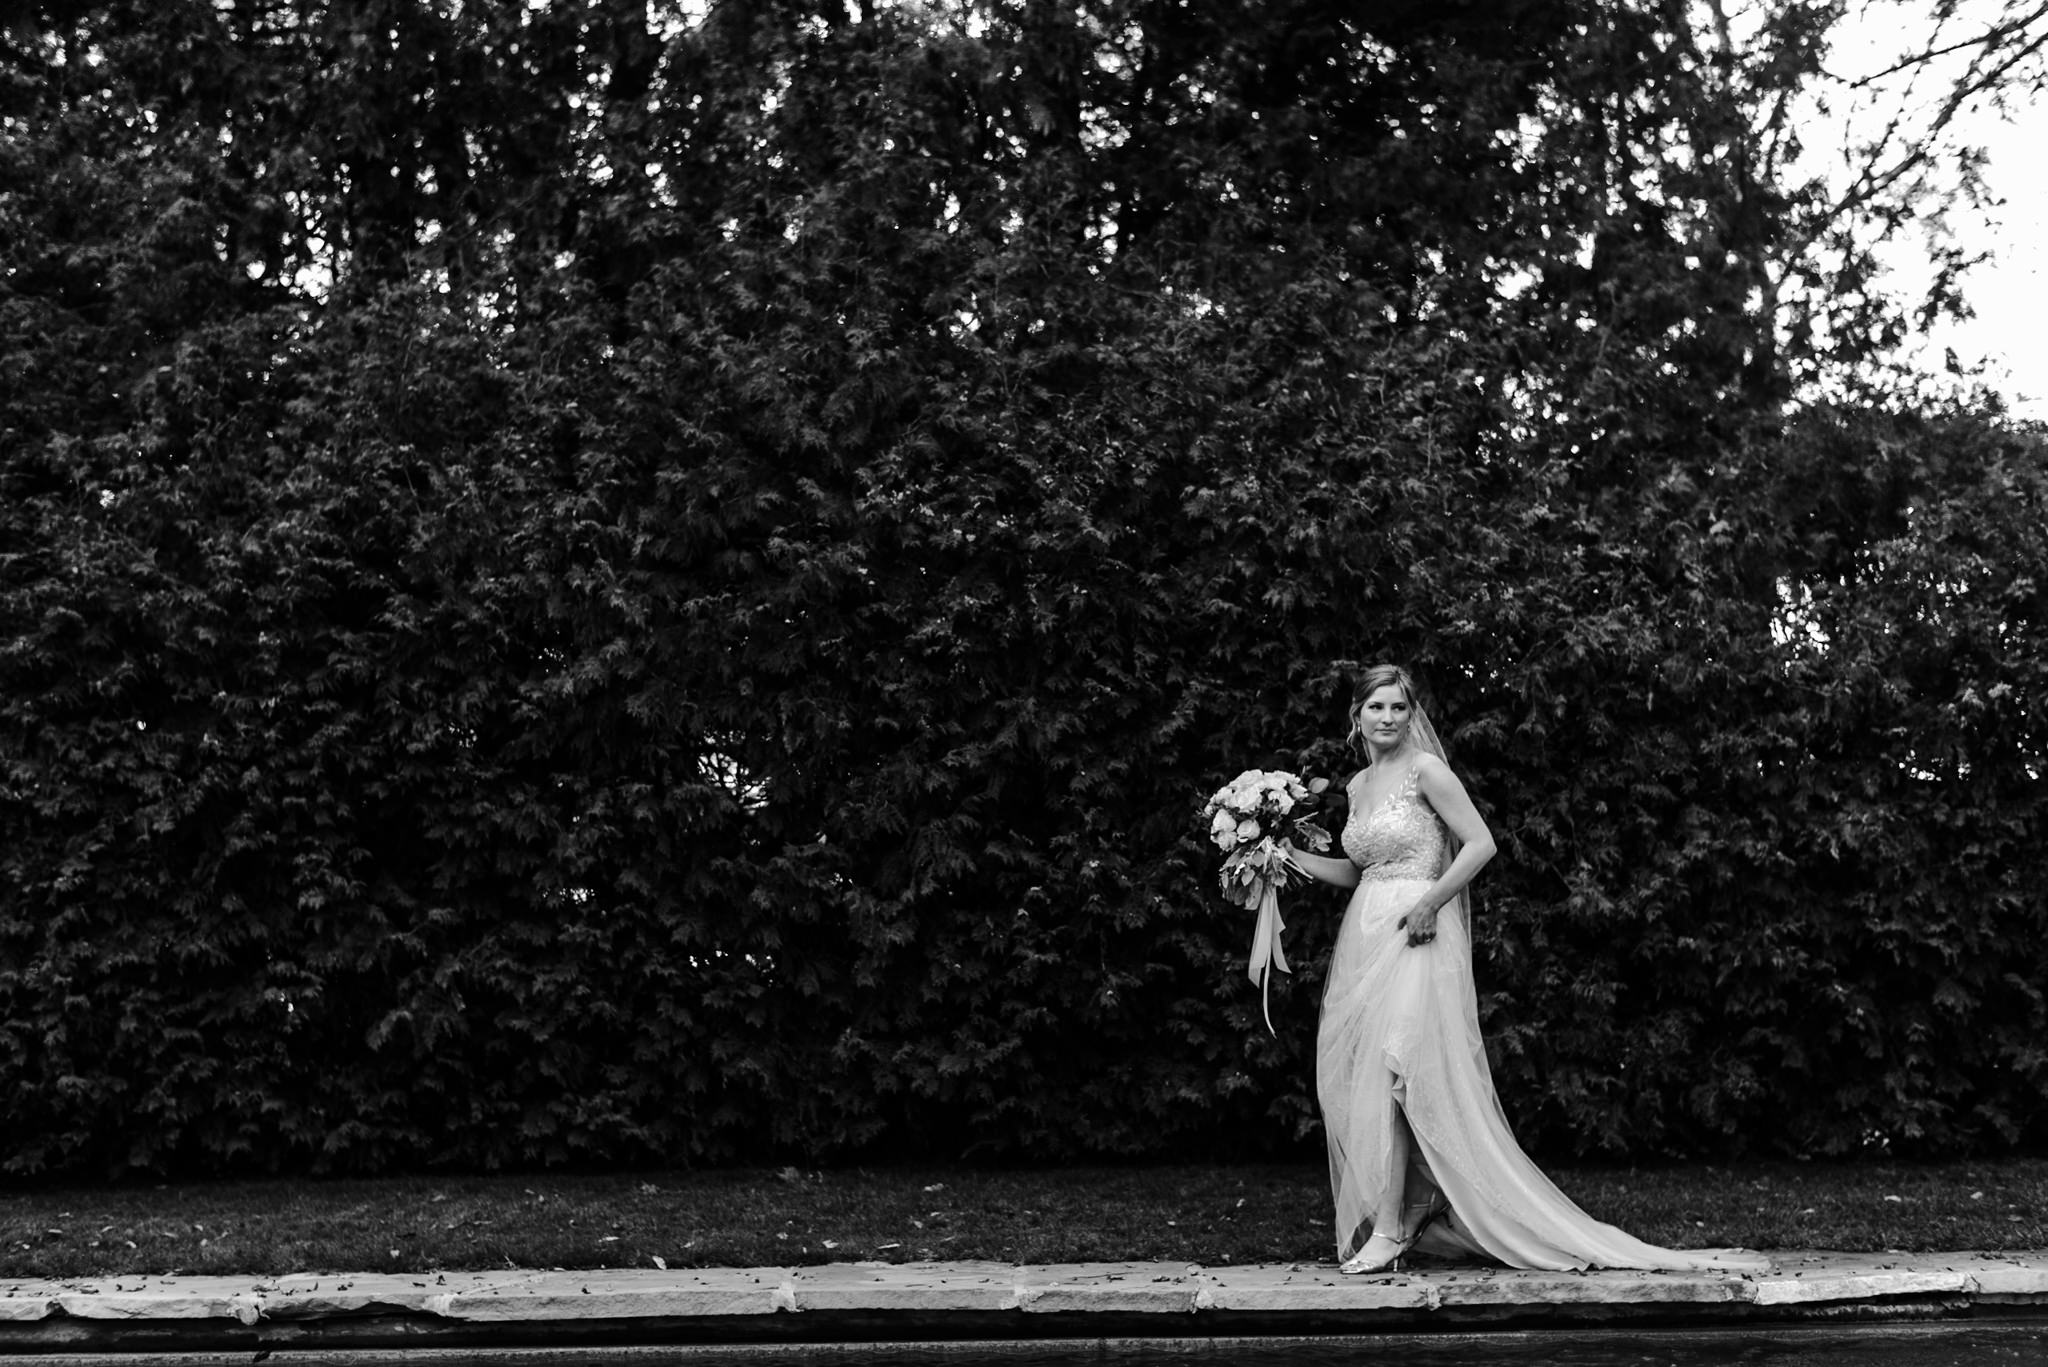 243-elegant-wedding-dress-couple-portraits-penryn-park-toronto-photographer.jpg